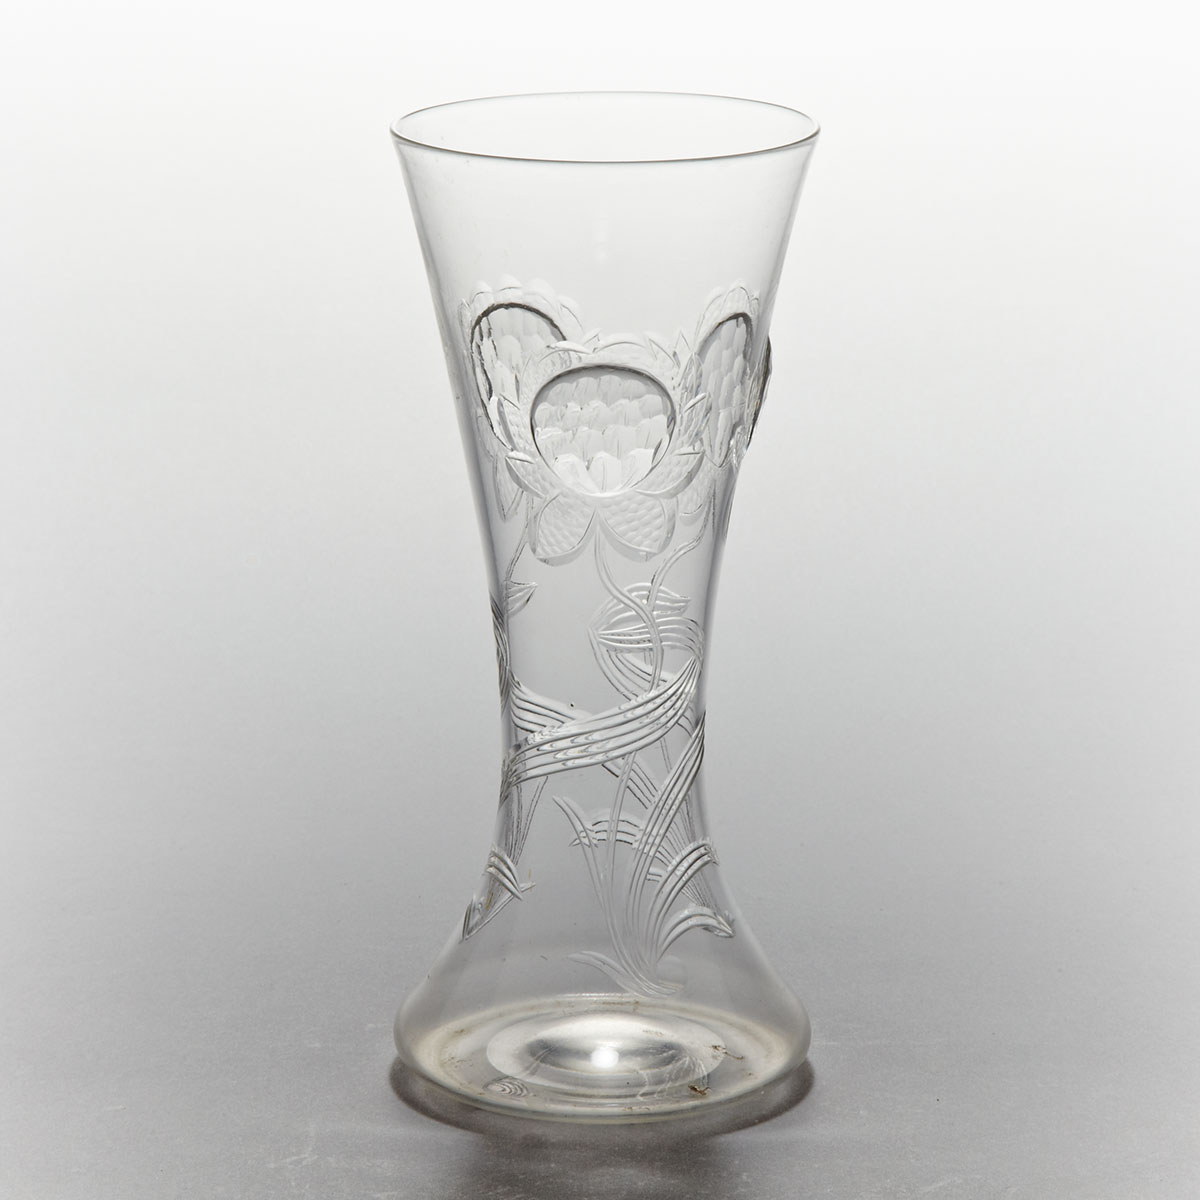 Art Nouveau ‘Rock Crystal’ Cut Glass Vase, probably English, c.1900-10